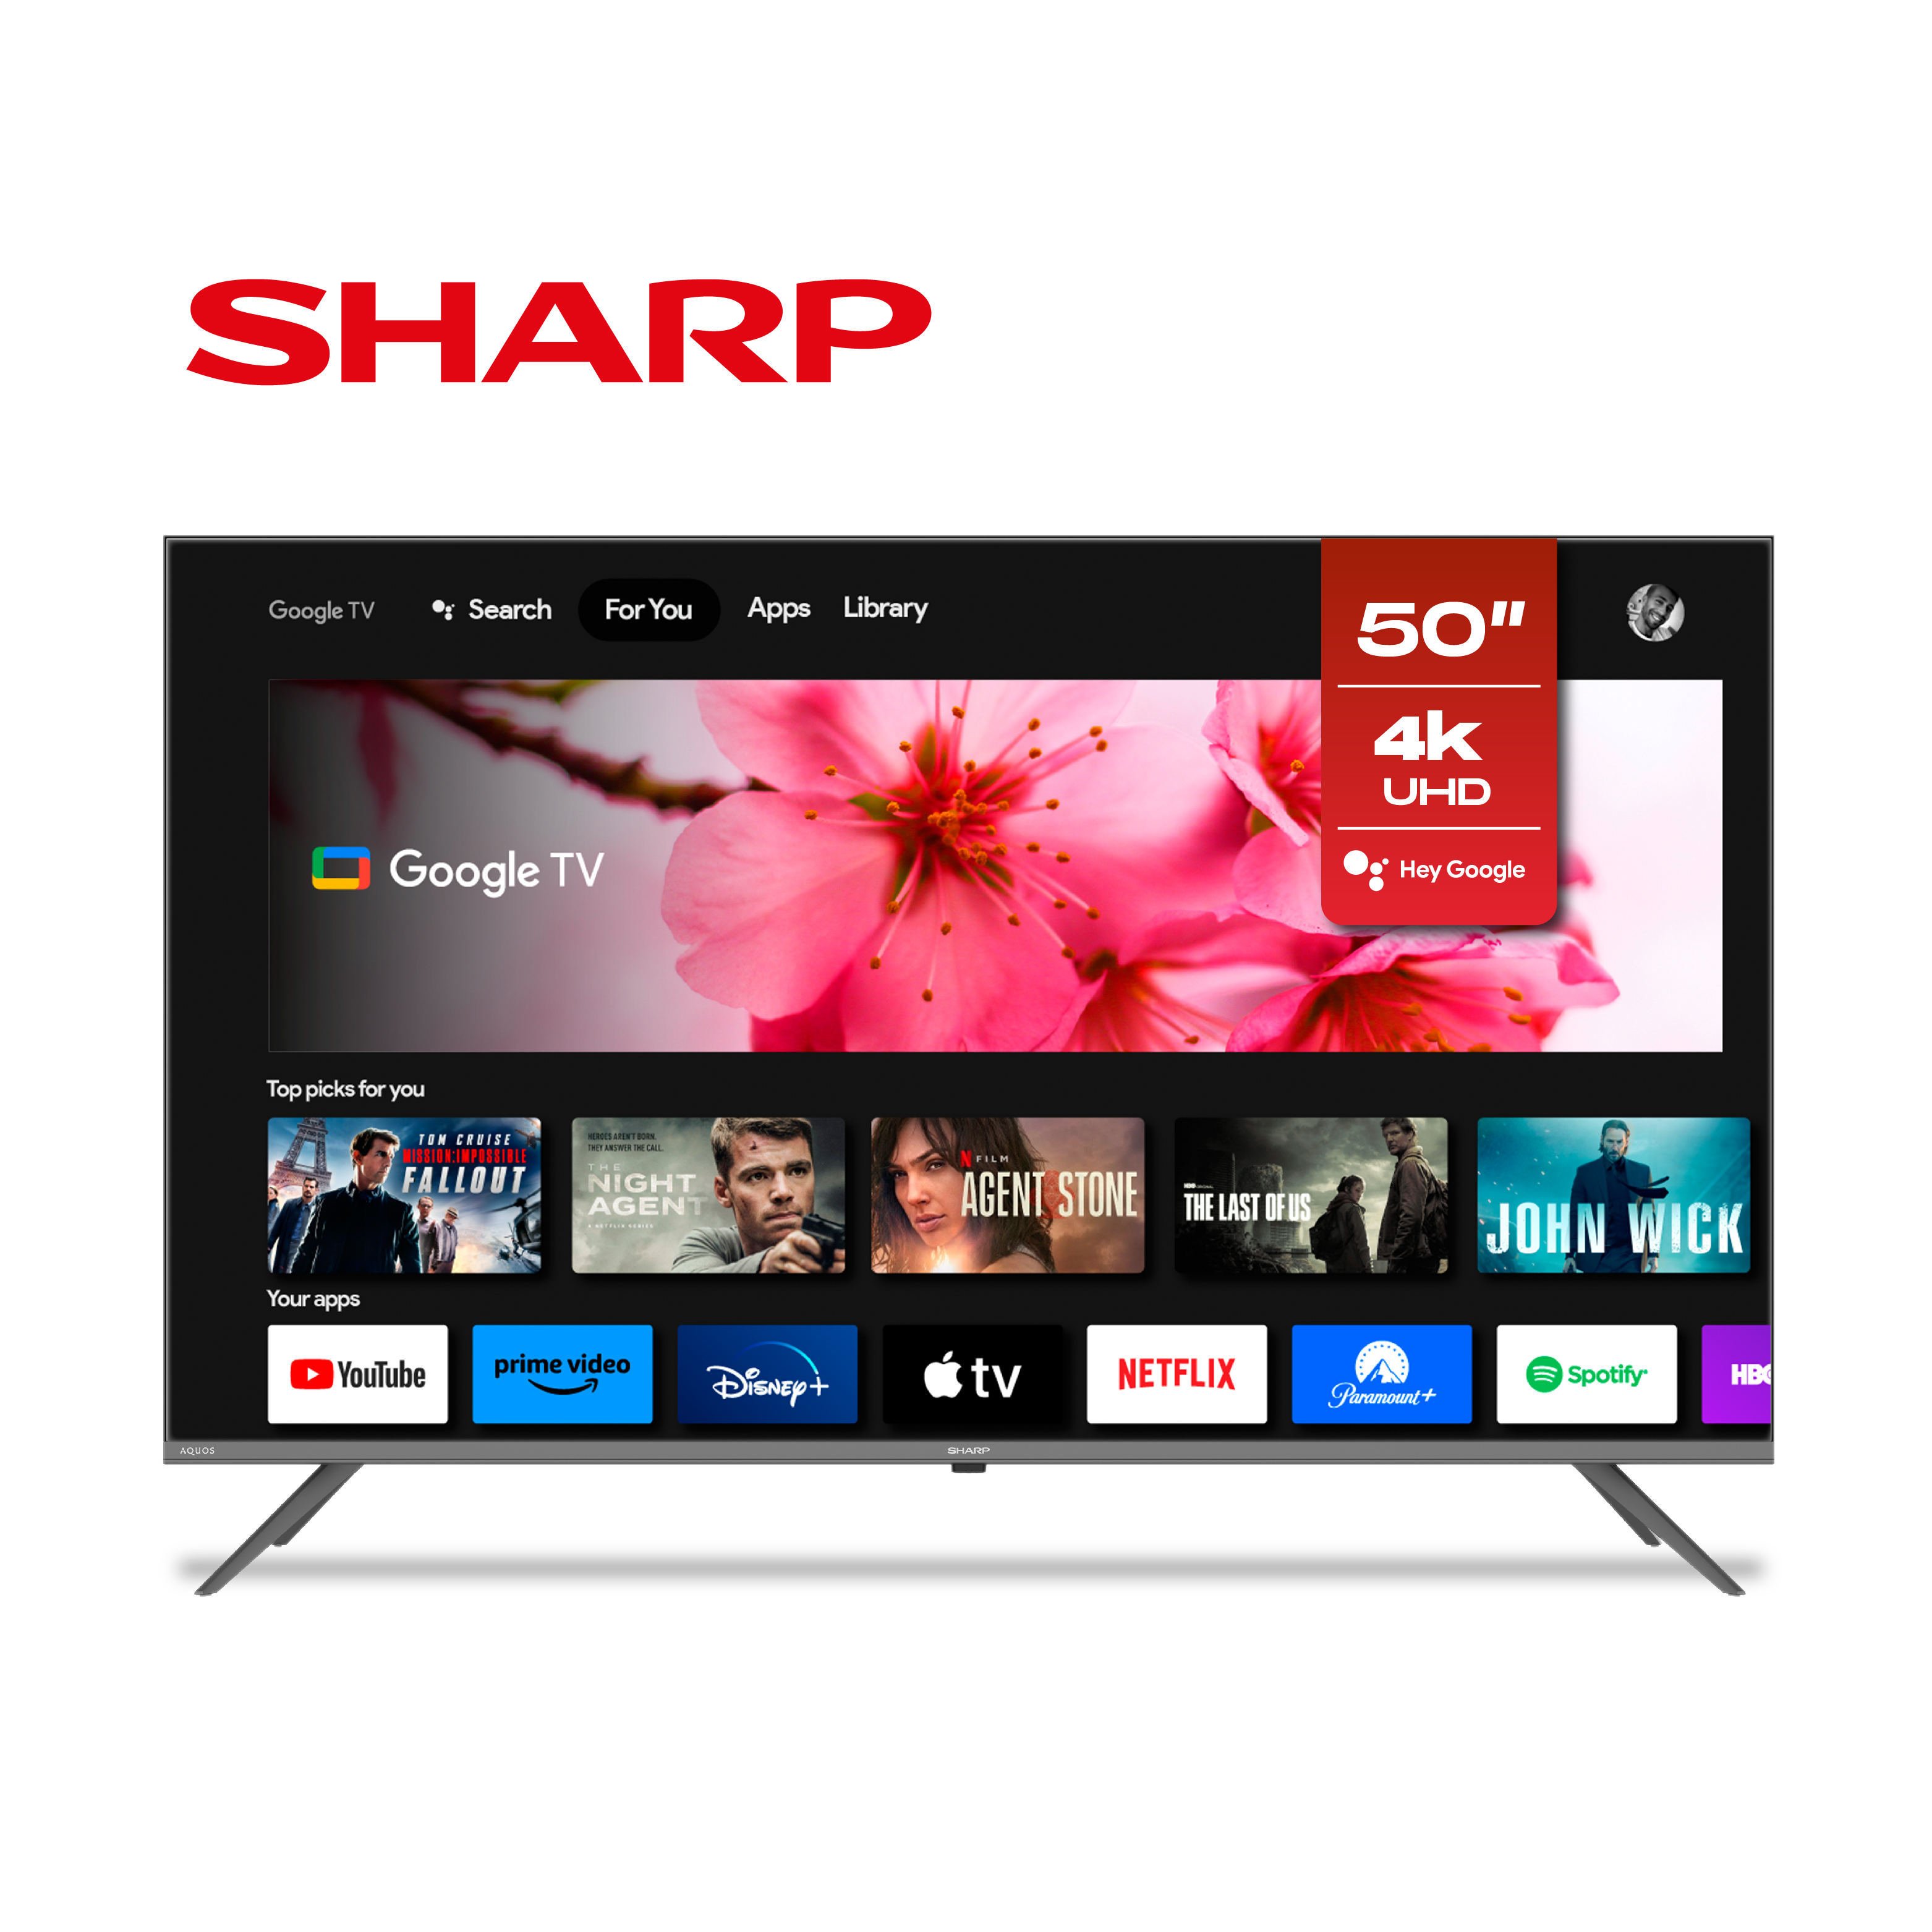 Smart TV LED HD 32'' TELEFUNKEN VIDAA TK3223H5